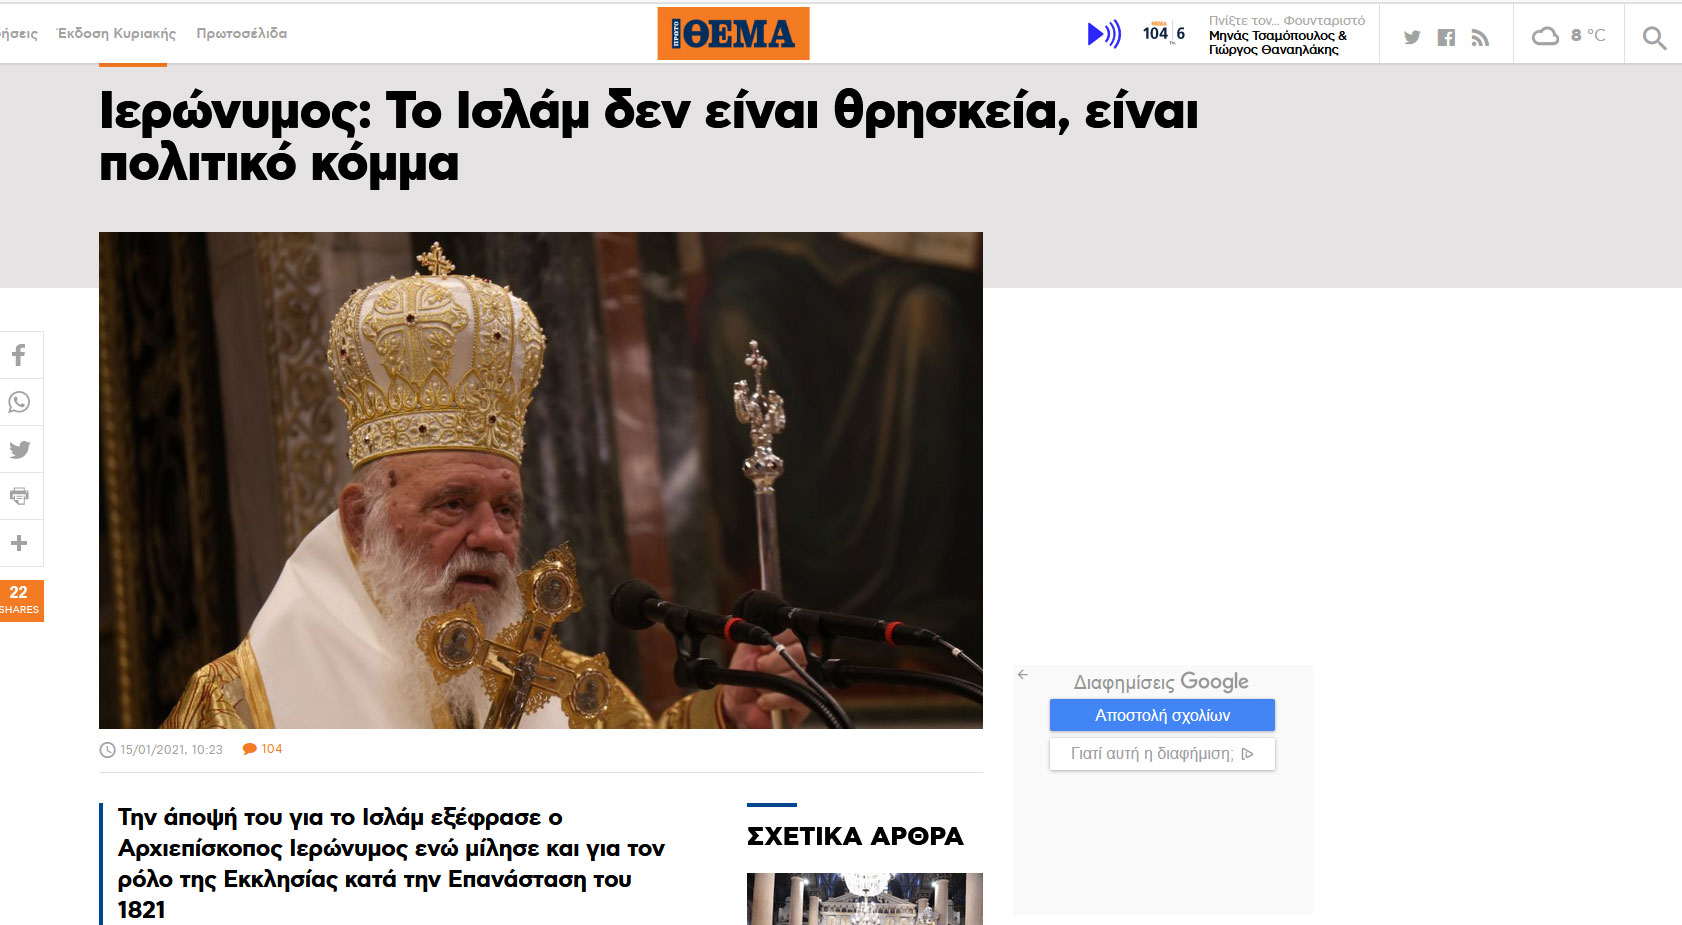 Islamophobic statement by the Archbishop of Greece